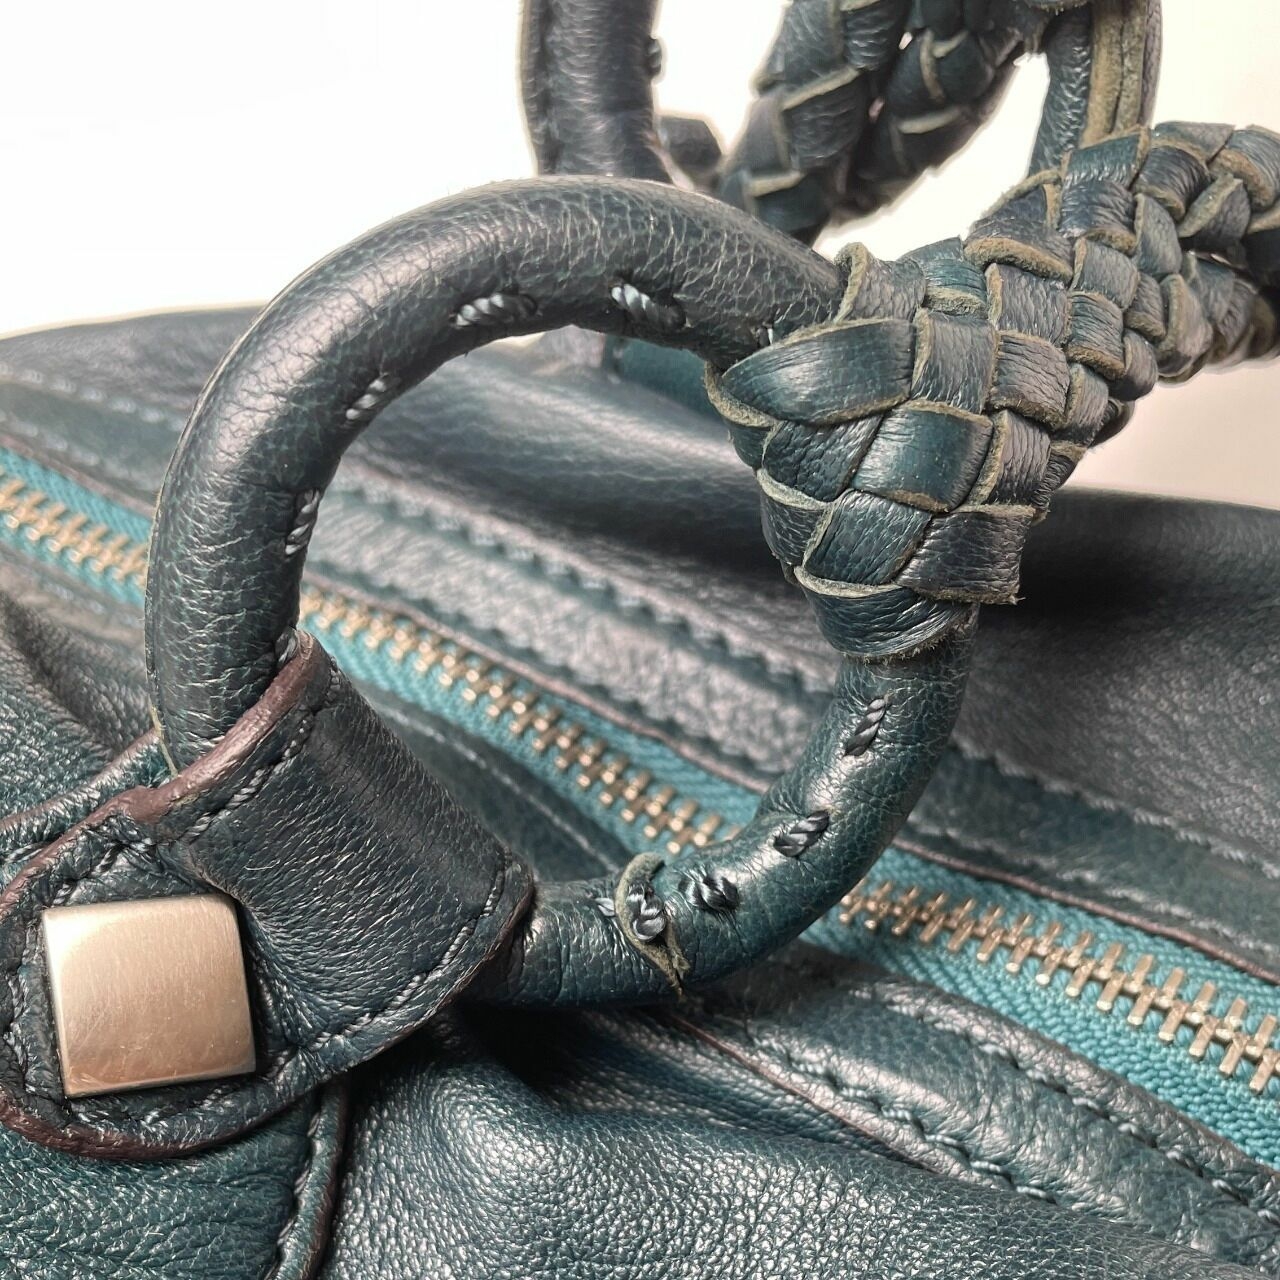 Rabeanco Army Green Leather Handbag